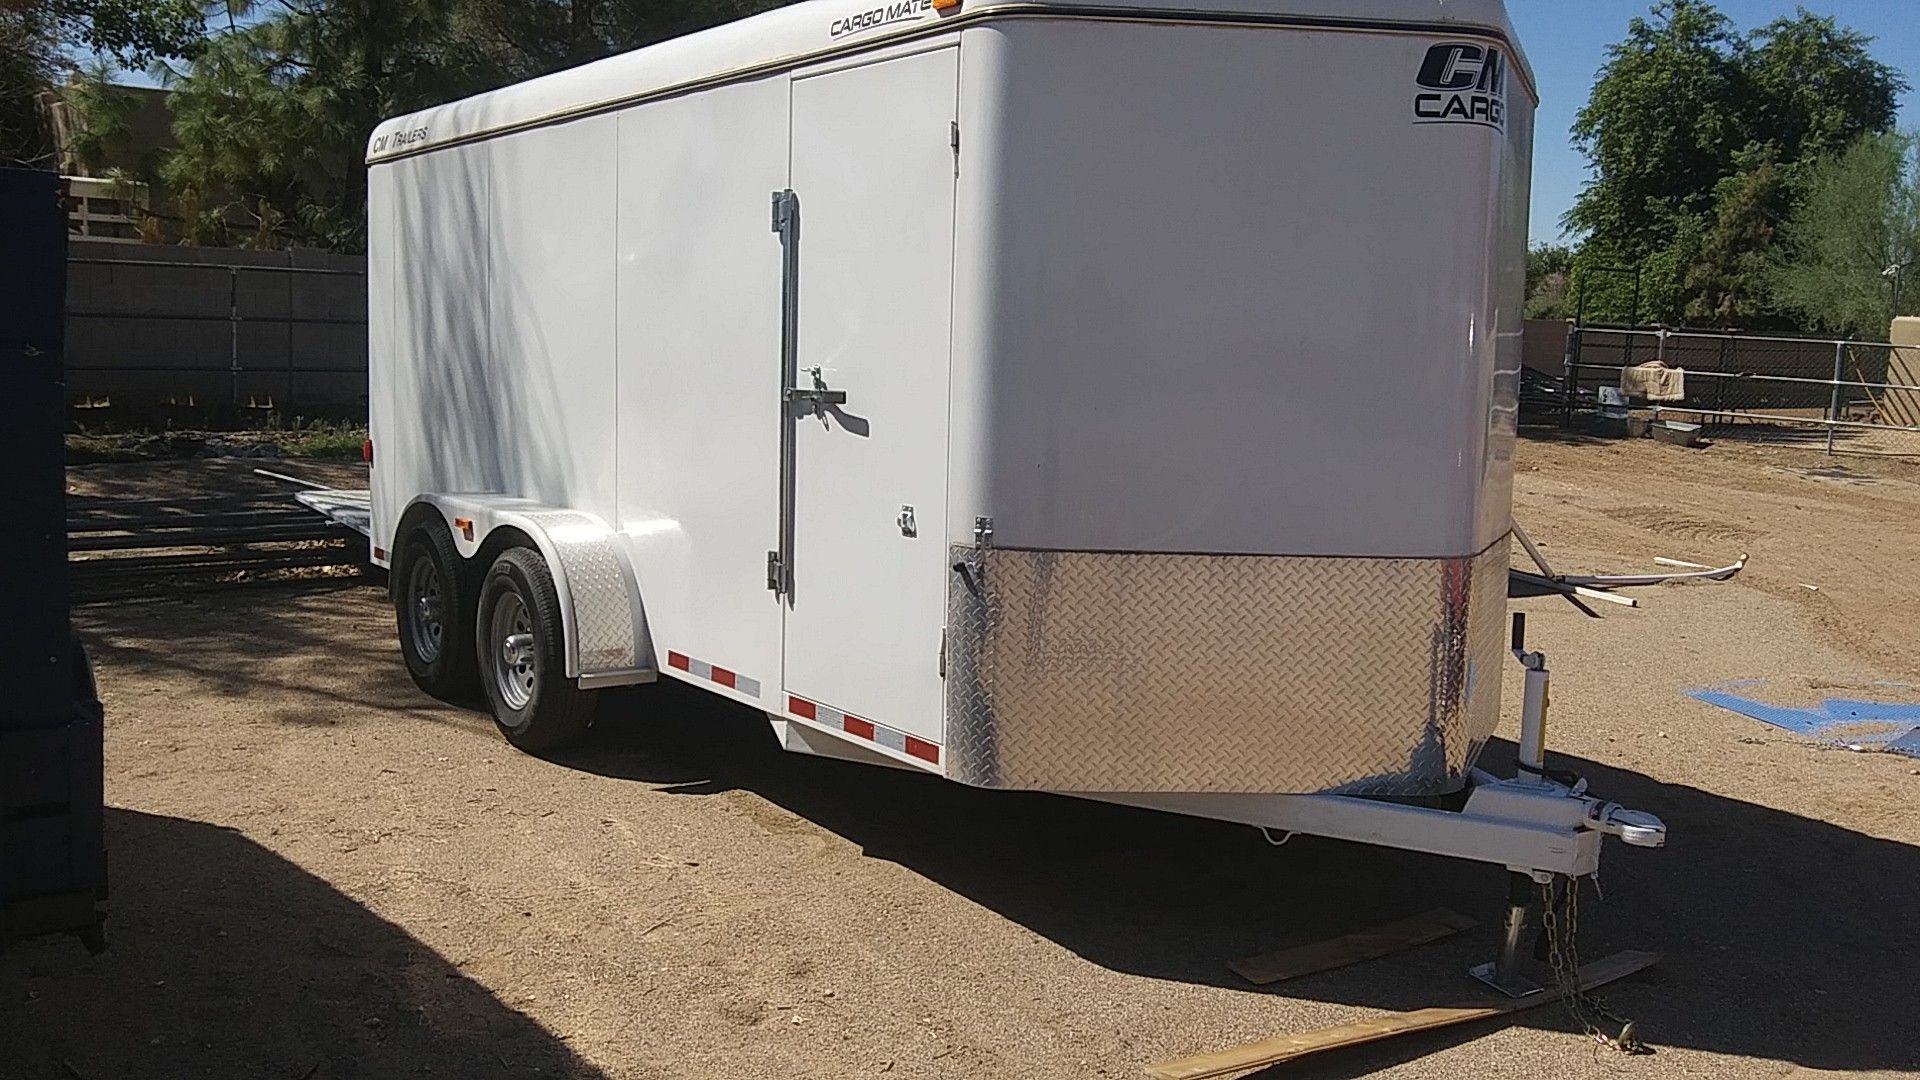 16ft enclosed trailer very heavy duty